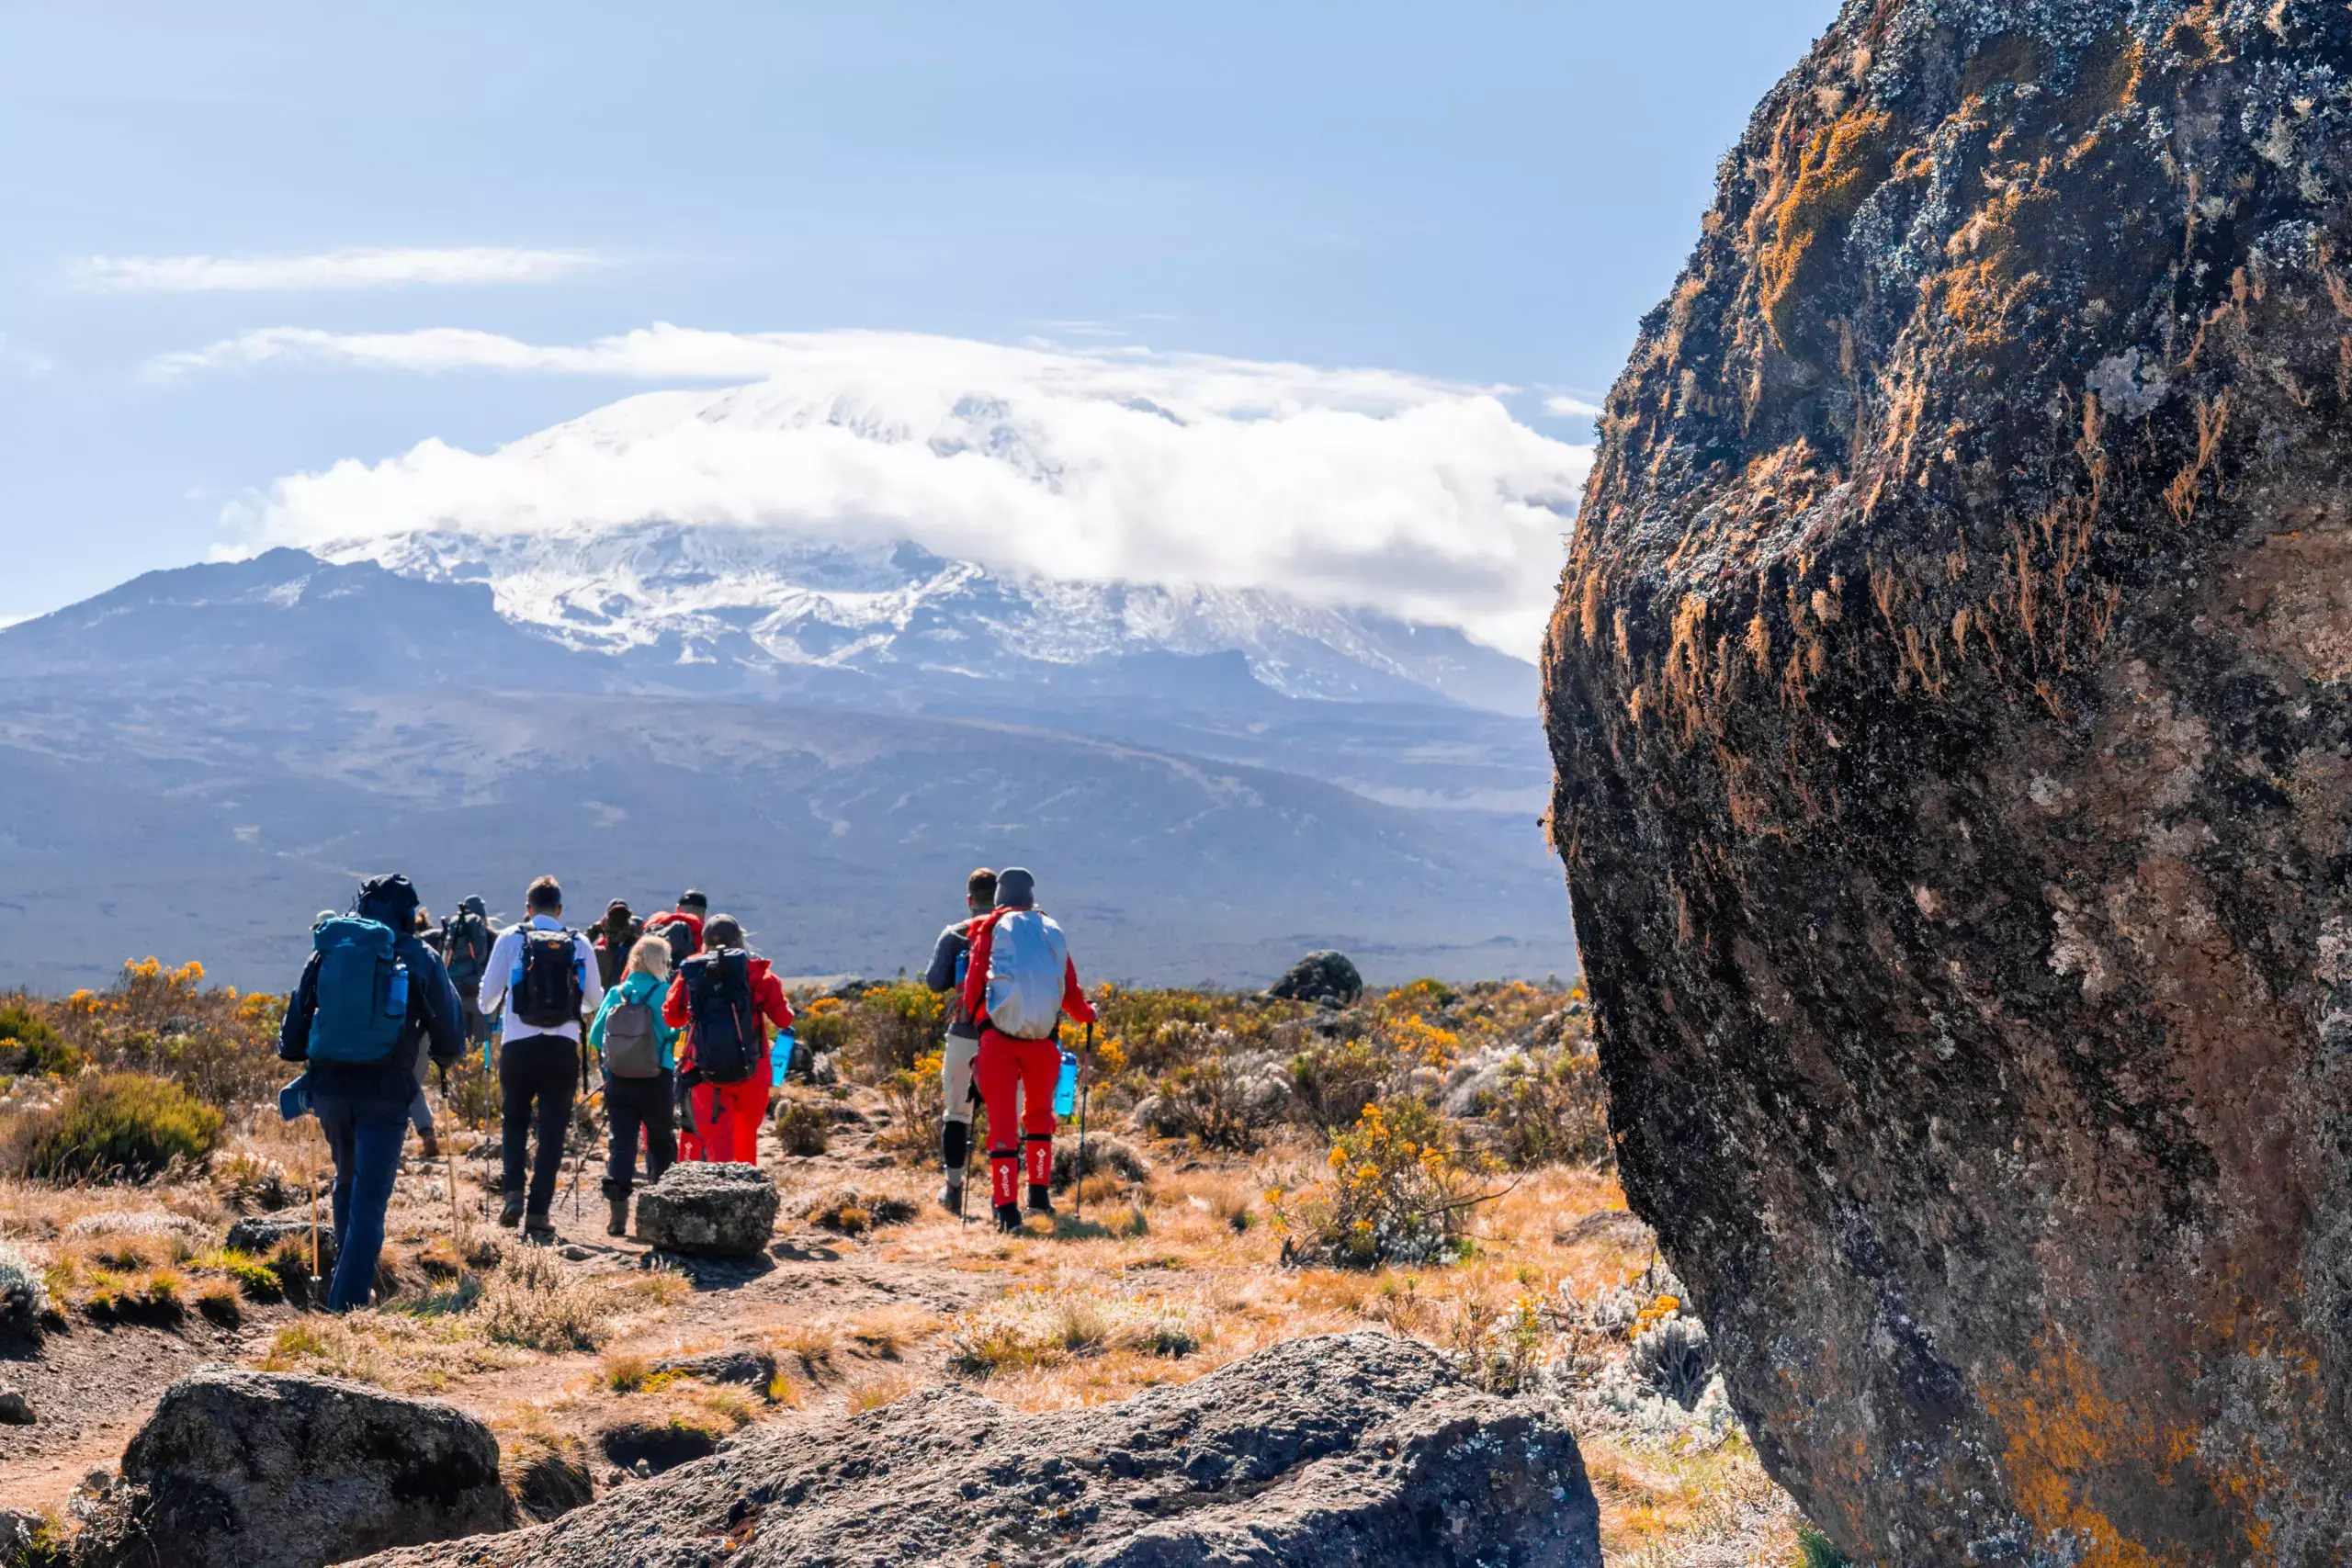 Trekkers on their way to summit Kilimanjaro